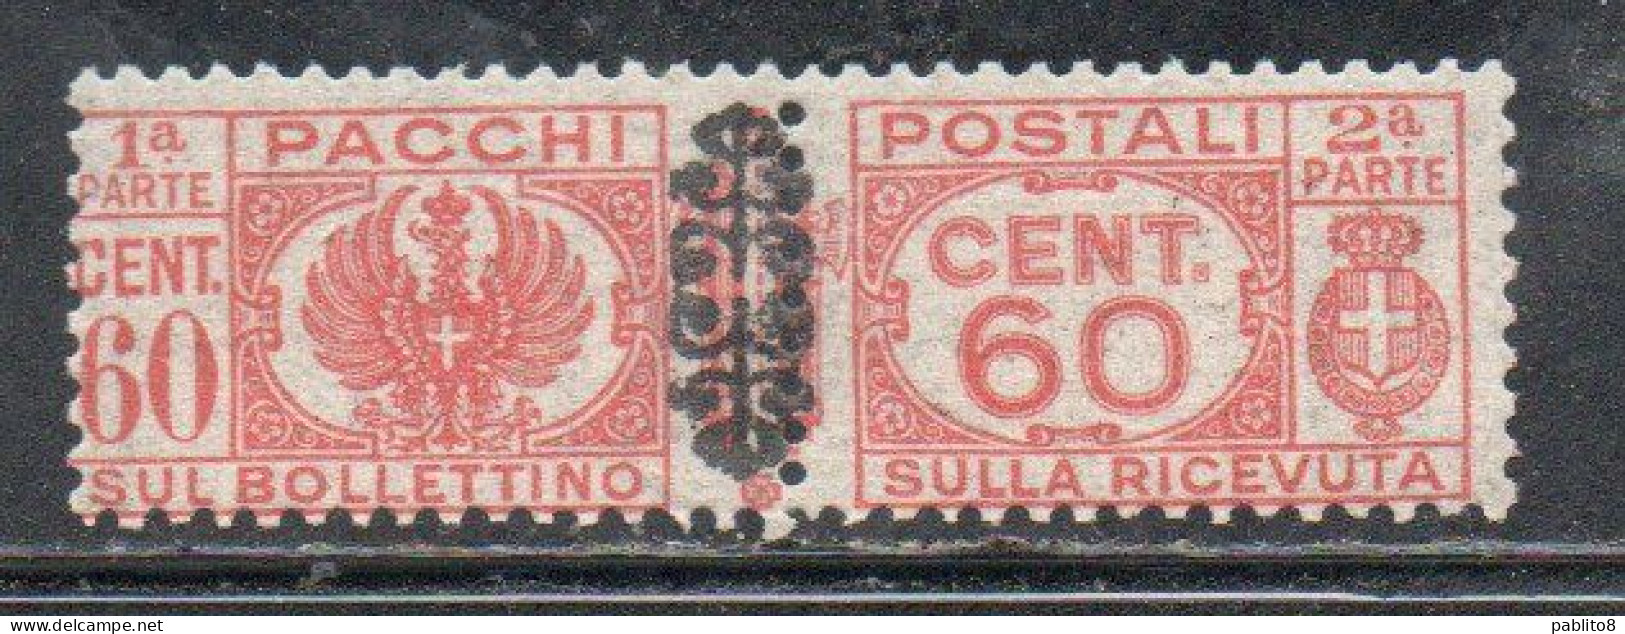 ITALIA REGNO ITALY KINGDOM 1945 LUOGOTENENZA PACCHI POSTALI PARCEL POST FREGIO CENT 60c MNH - Colis-postaux